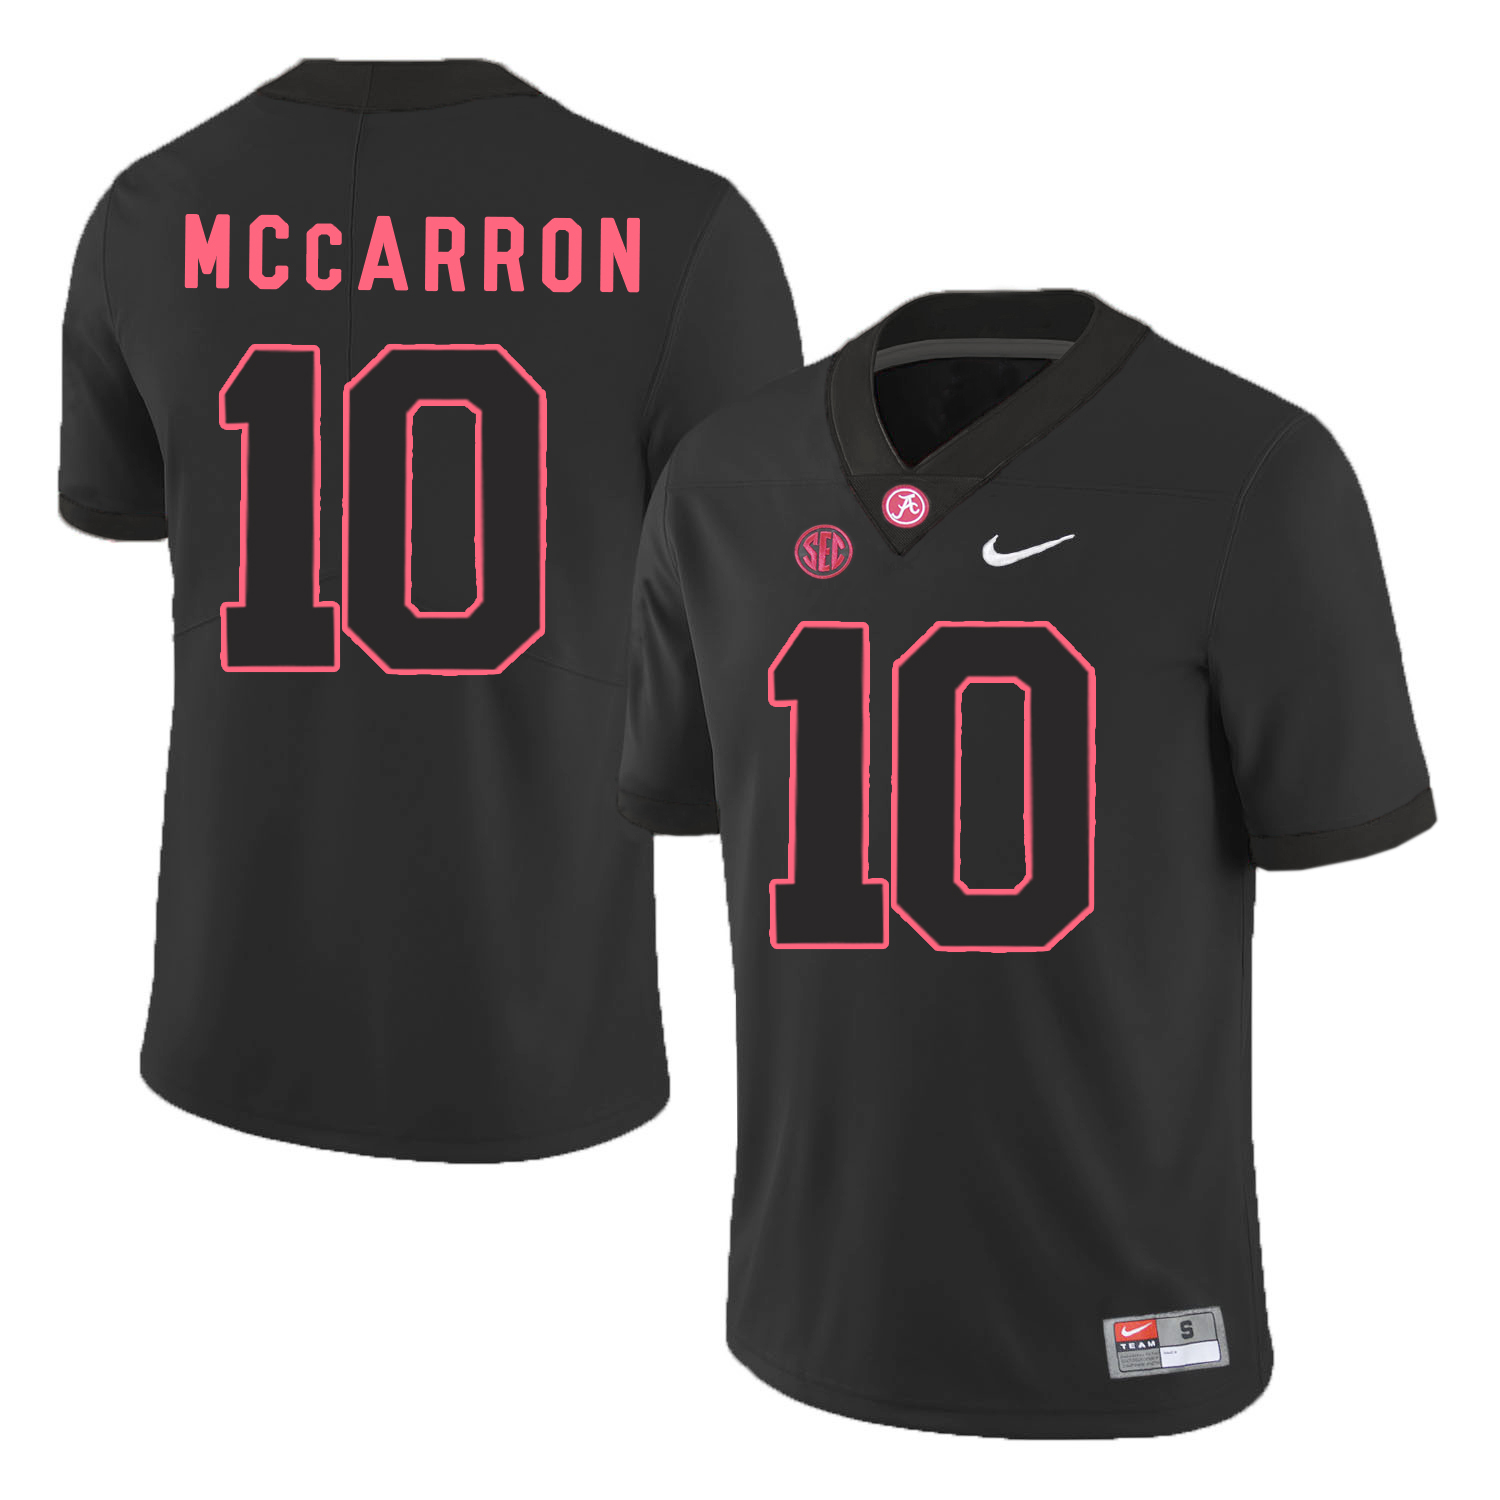 NCAA Alabama Crimson Tide #10 McCarron Black Shawdow Football Jersey